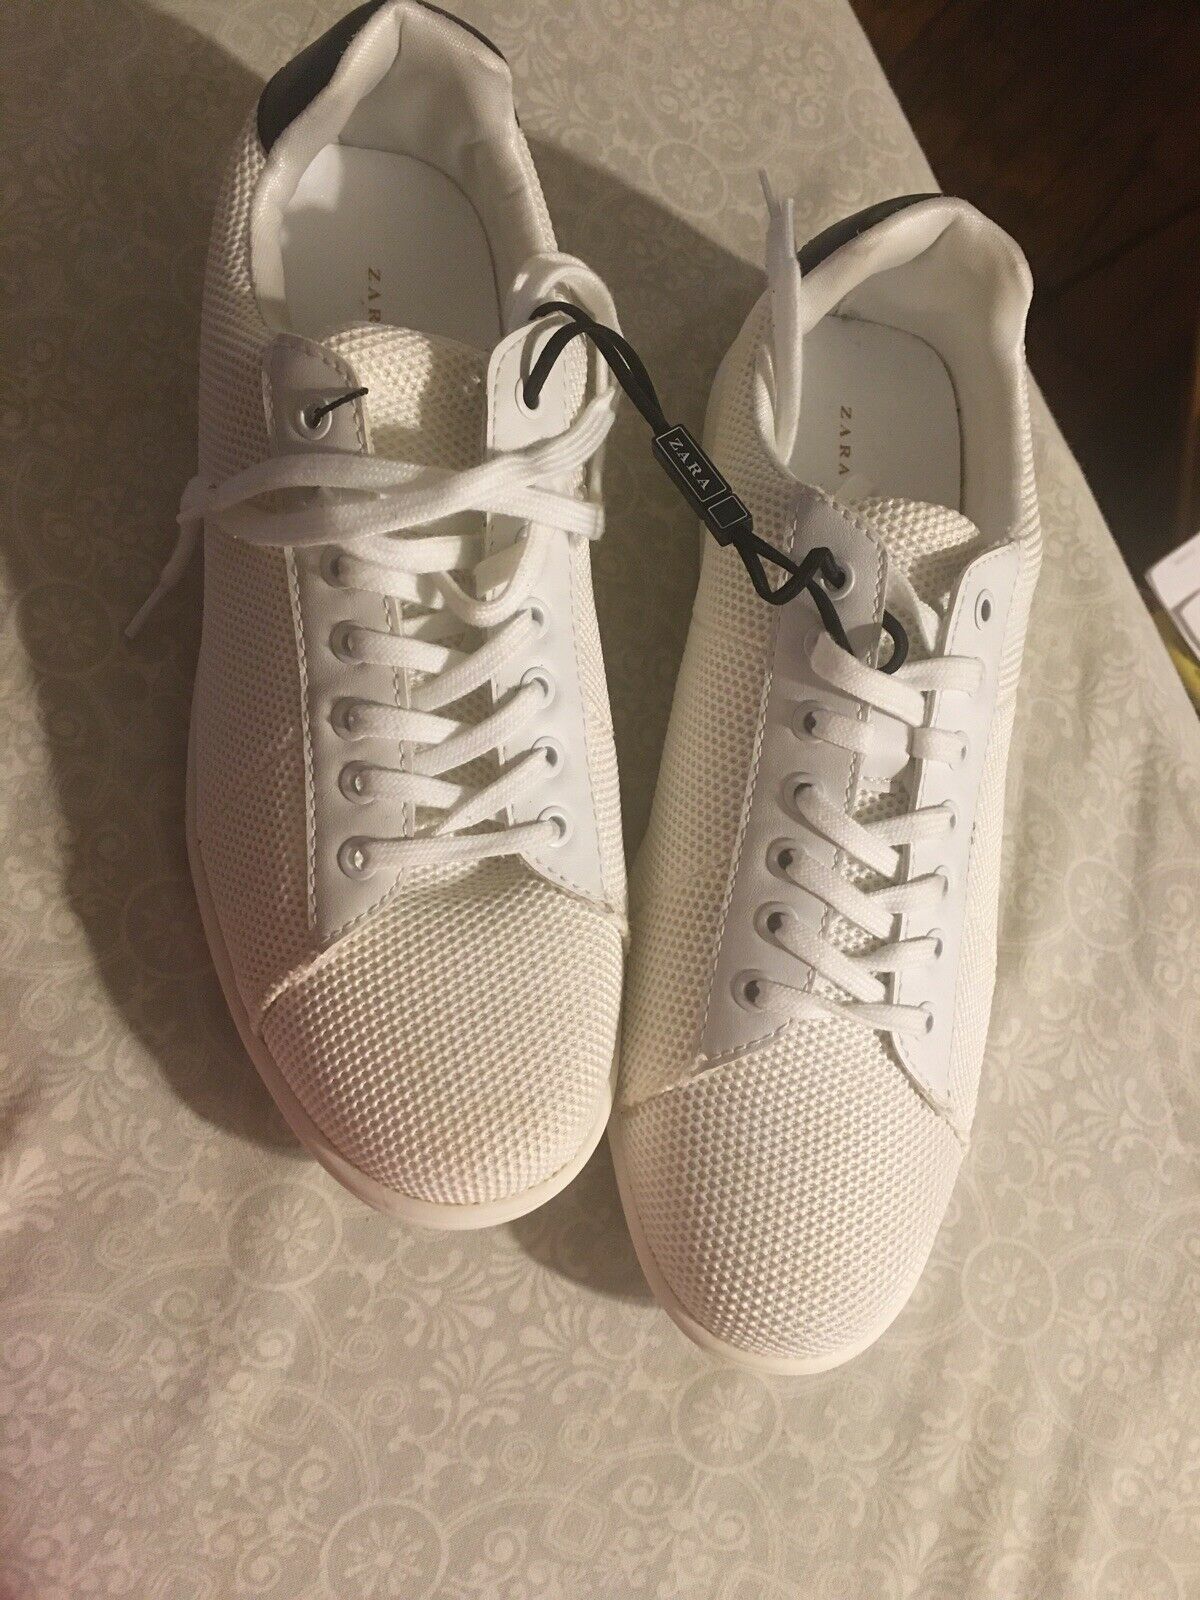 Zara Man Retro Sneakers (MEN’s) White with Navy Trim Shoes Size 41 US 8M